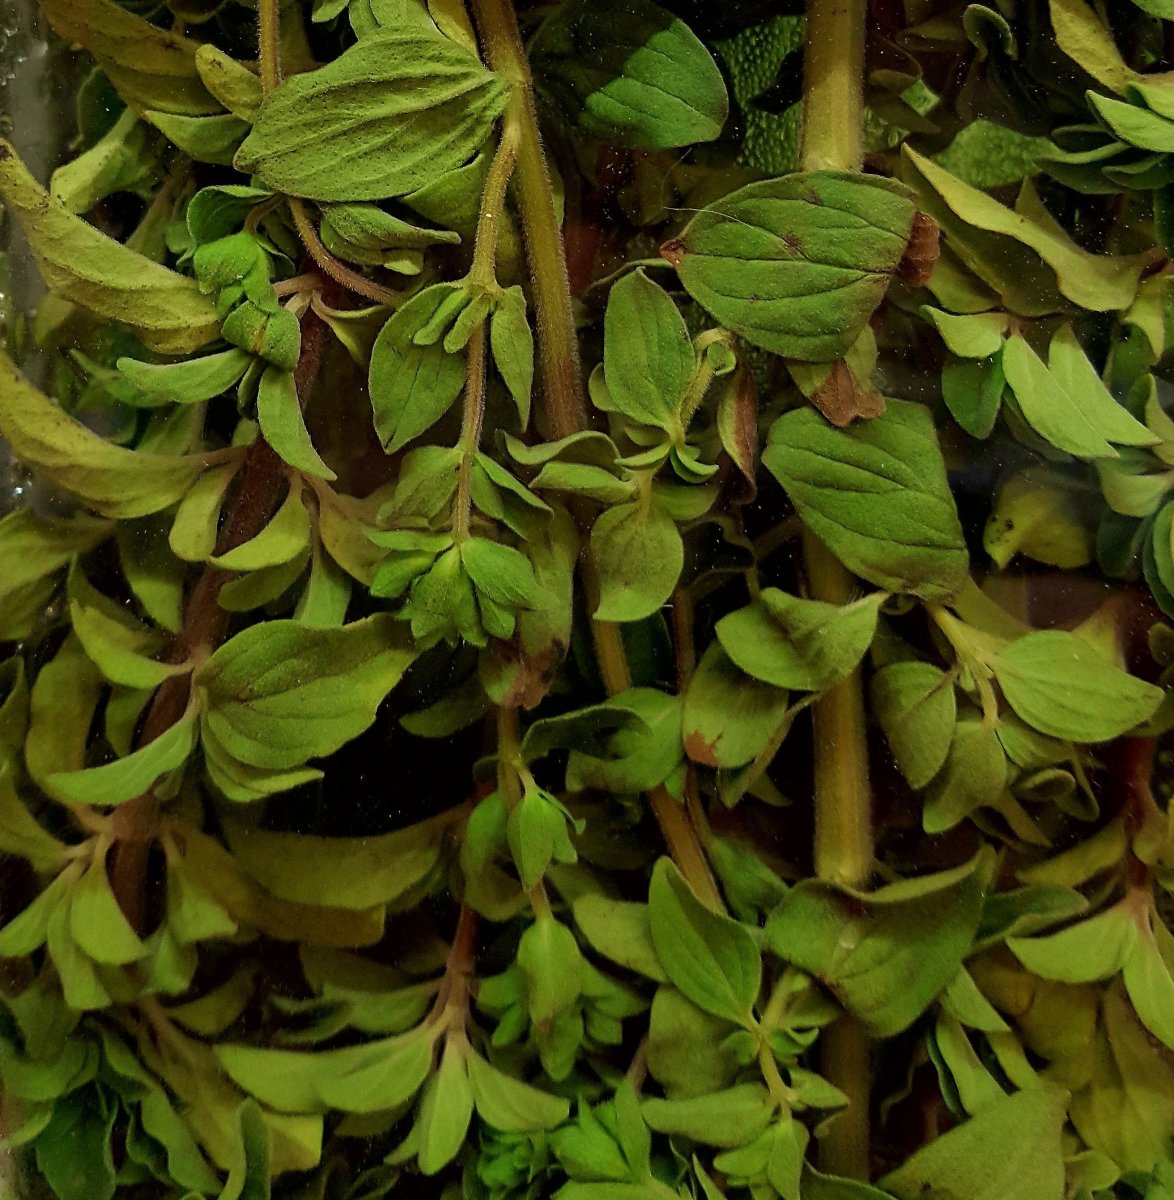 Fresh oregano leaves